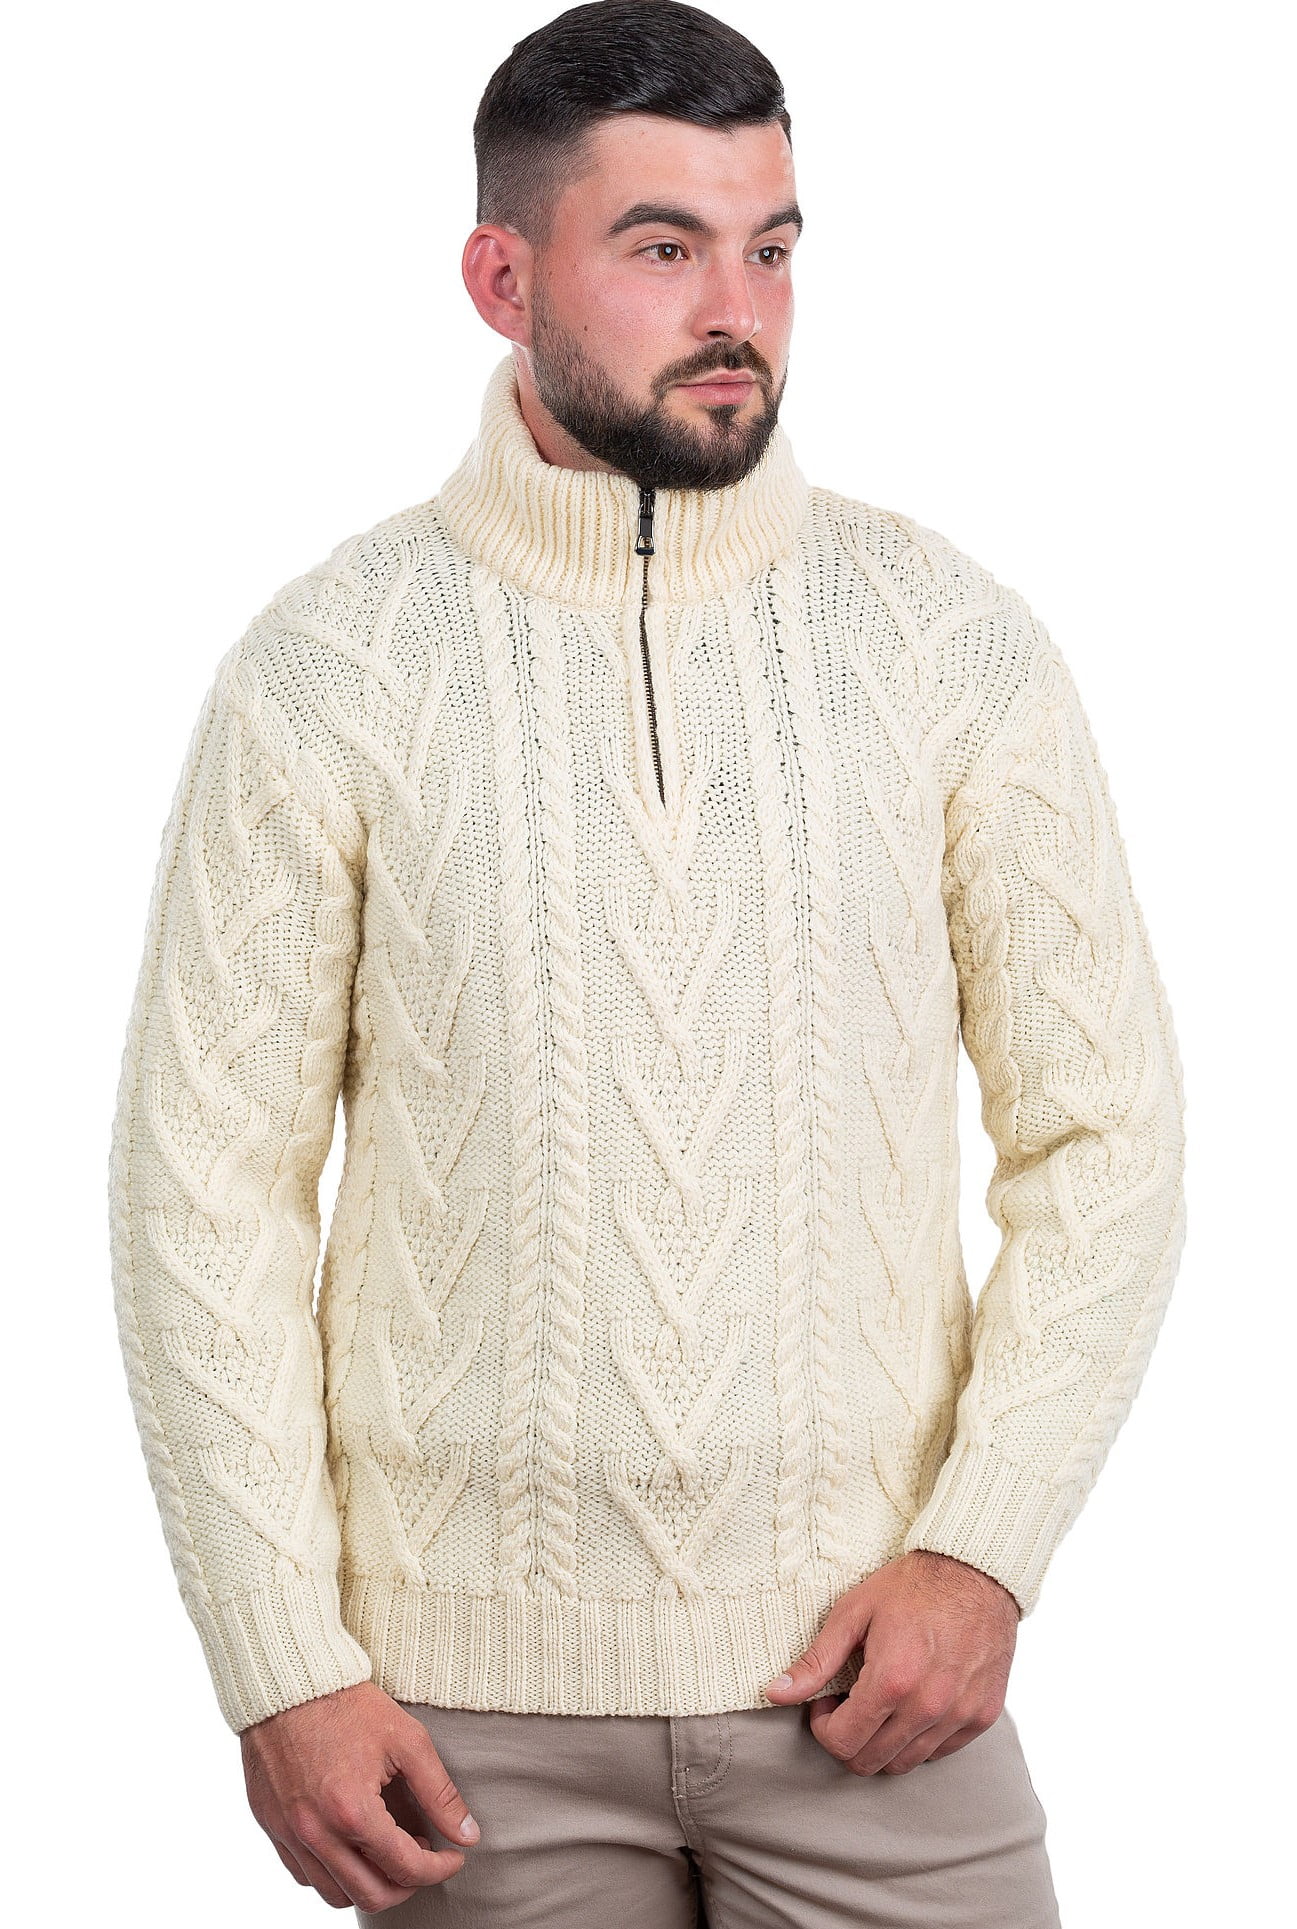 Men's Zip Neck Aran Fisherman Cable Knit Winter Outdoor Ireland Sweater — 100% Premium Merino Wool Jumper — Soft & Warm Knitted Pullover Kleding Herenkleding Sweaters Pullovers 